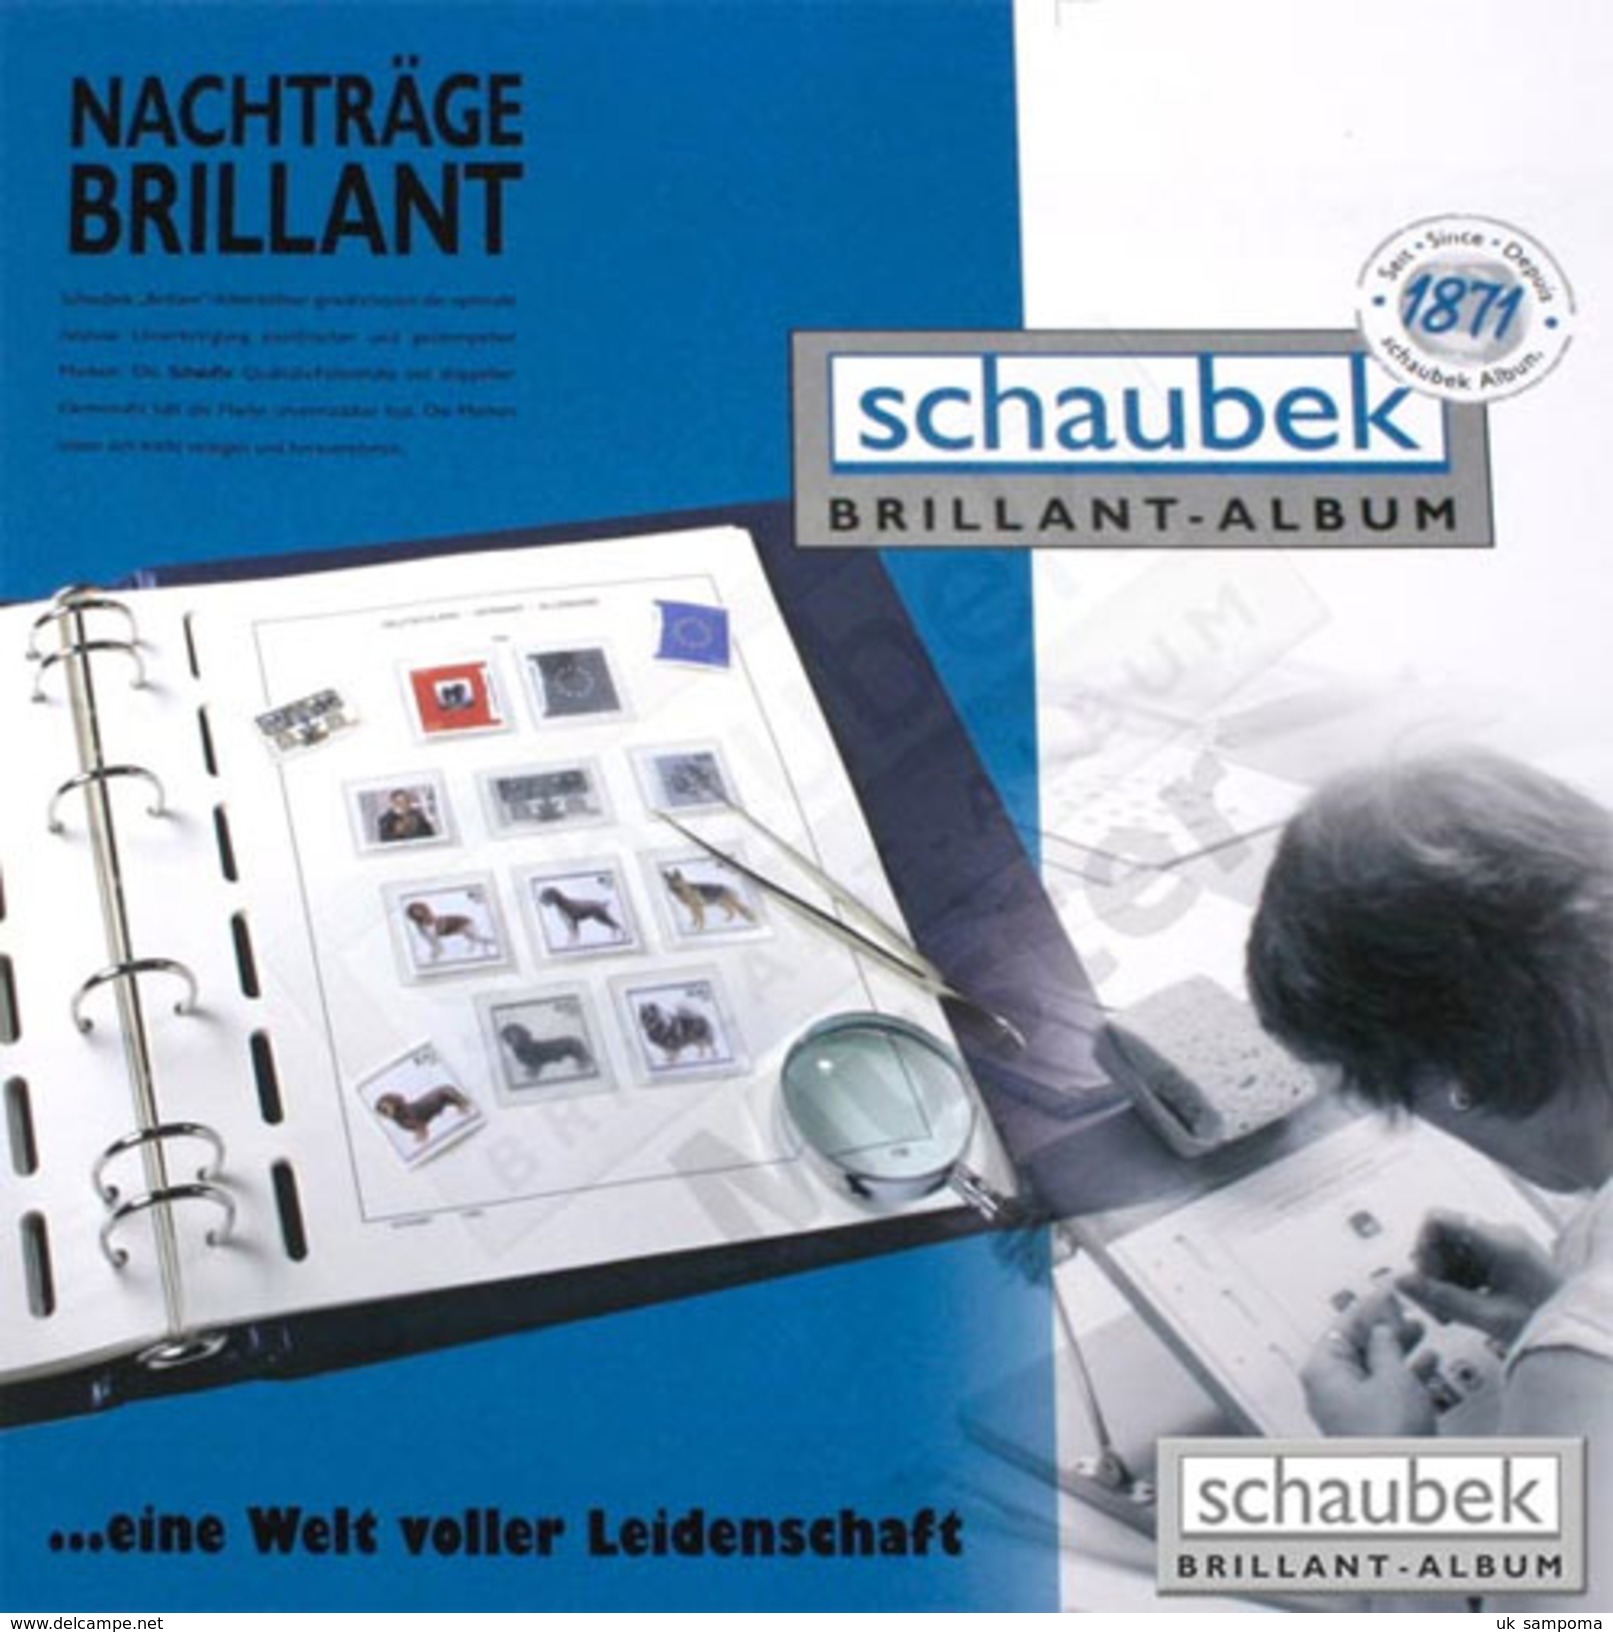 Schaubek A-861/02B Album UN Geneva 2010-2017 Brillant, In A Blue Screw Post Binder, Vol. II, Without Slipcase - Binders With Pages